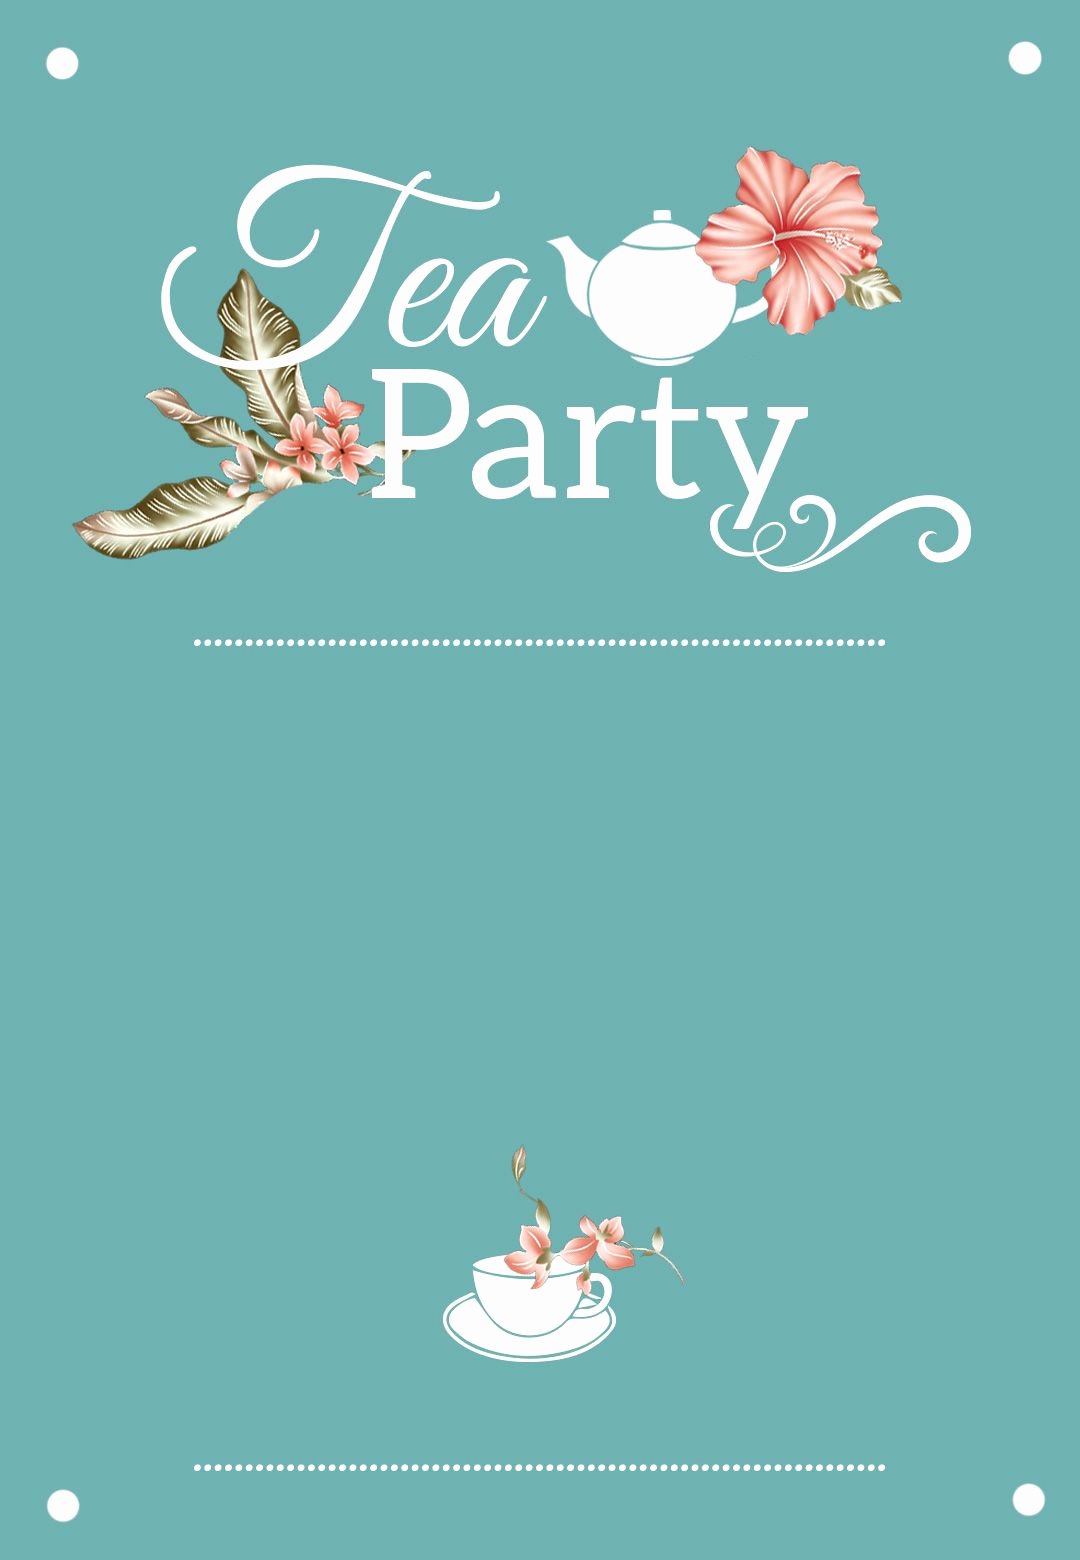 Tea Party Invite Template Inspirational Bridal Shower Tea Party Free Printable Bridal Shower